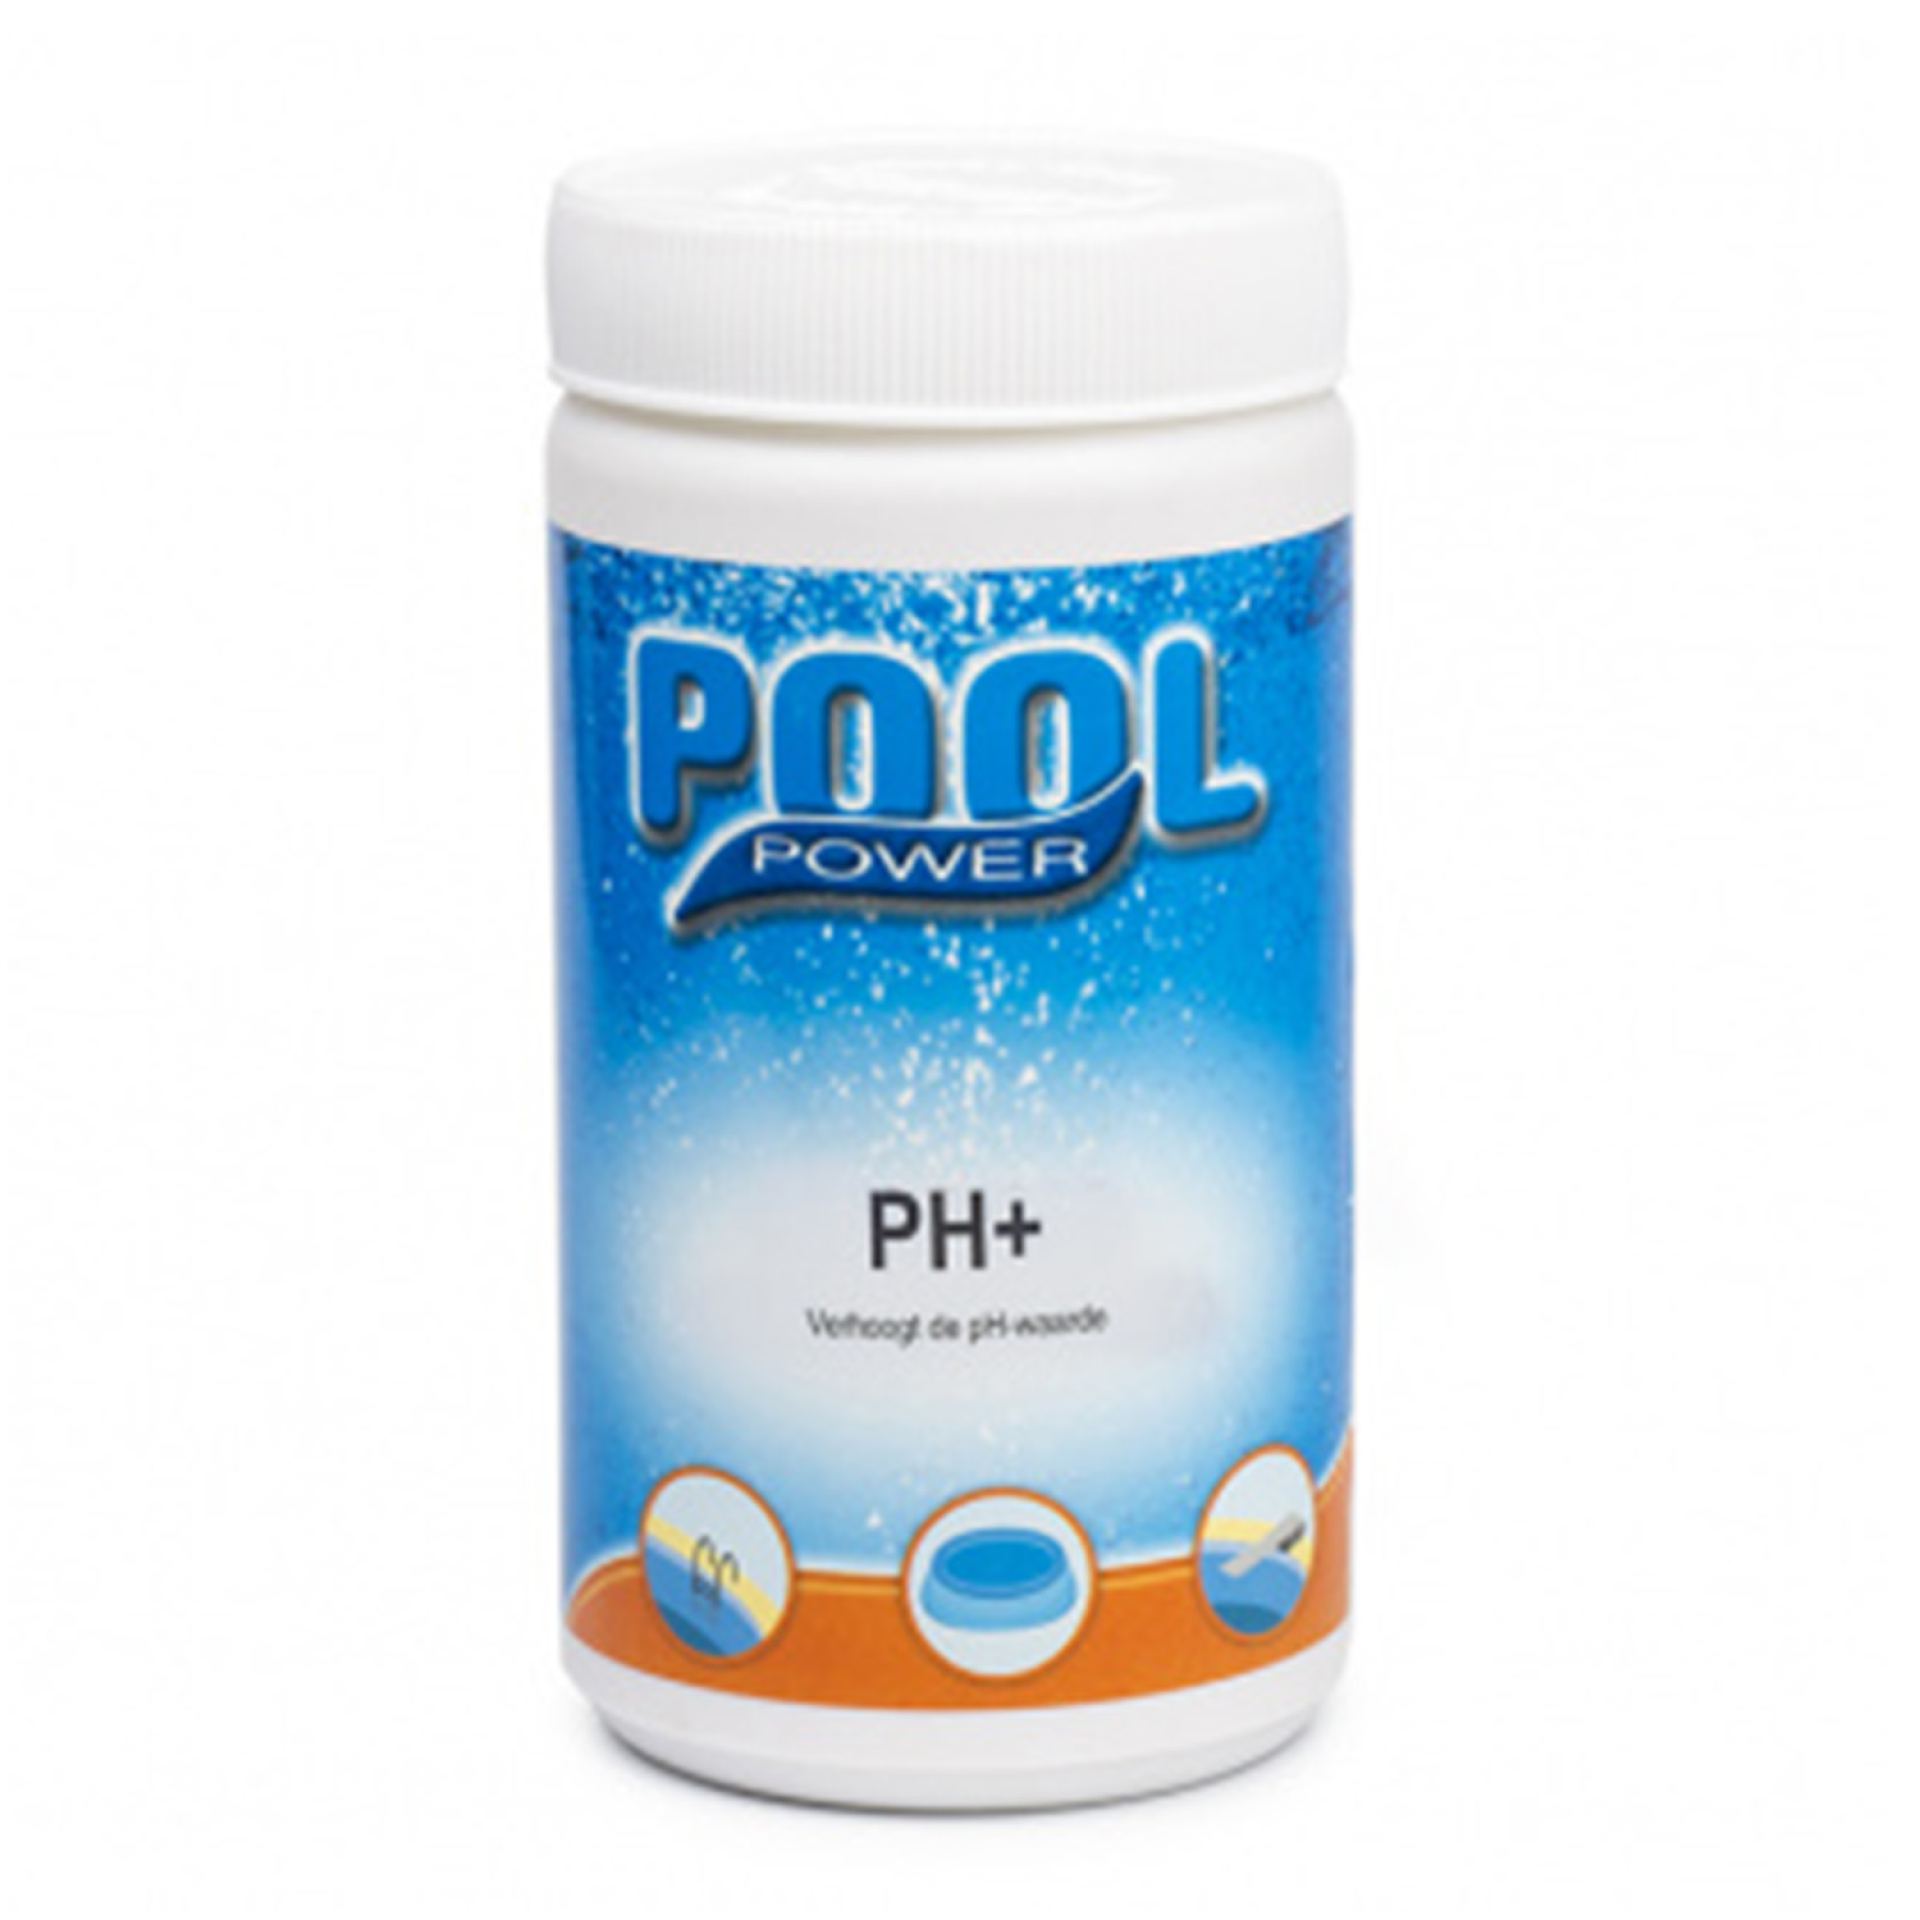 Pool power PH+ 1kg bestellen